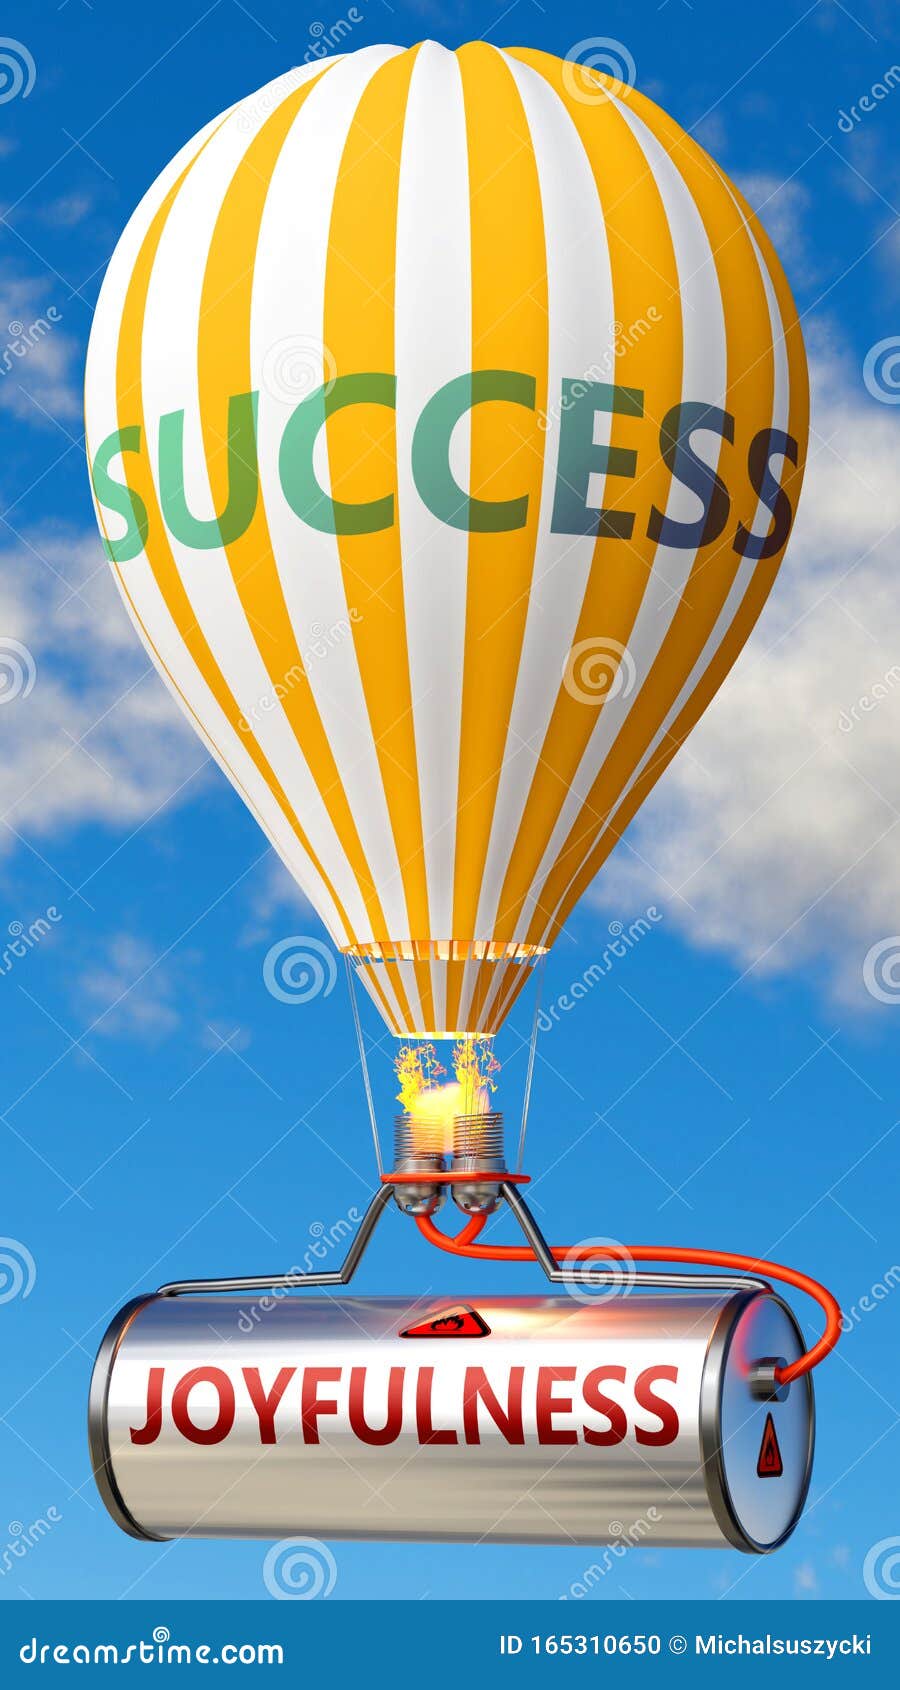 joyfulness and success - shown as word joyfulness on a fuel tank and a balloon, to ize that joyfulness contribute to success